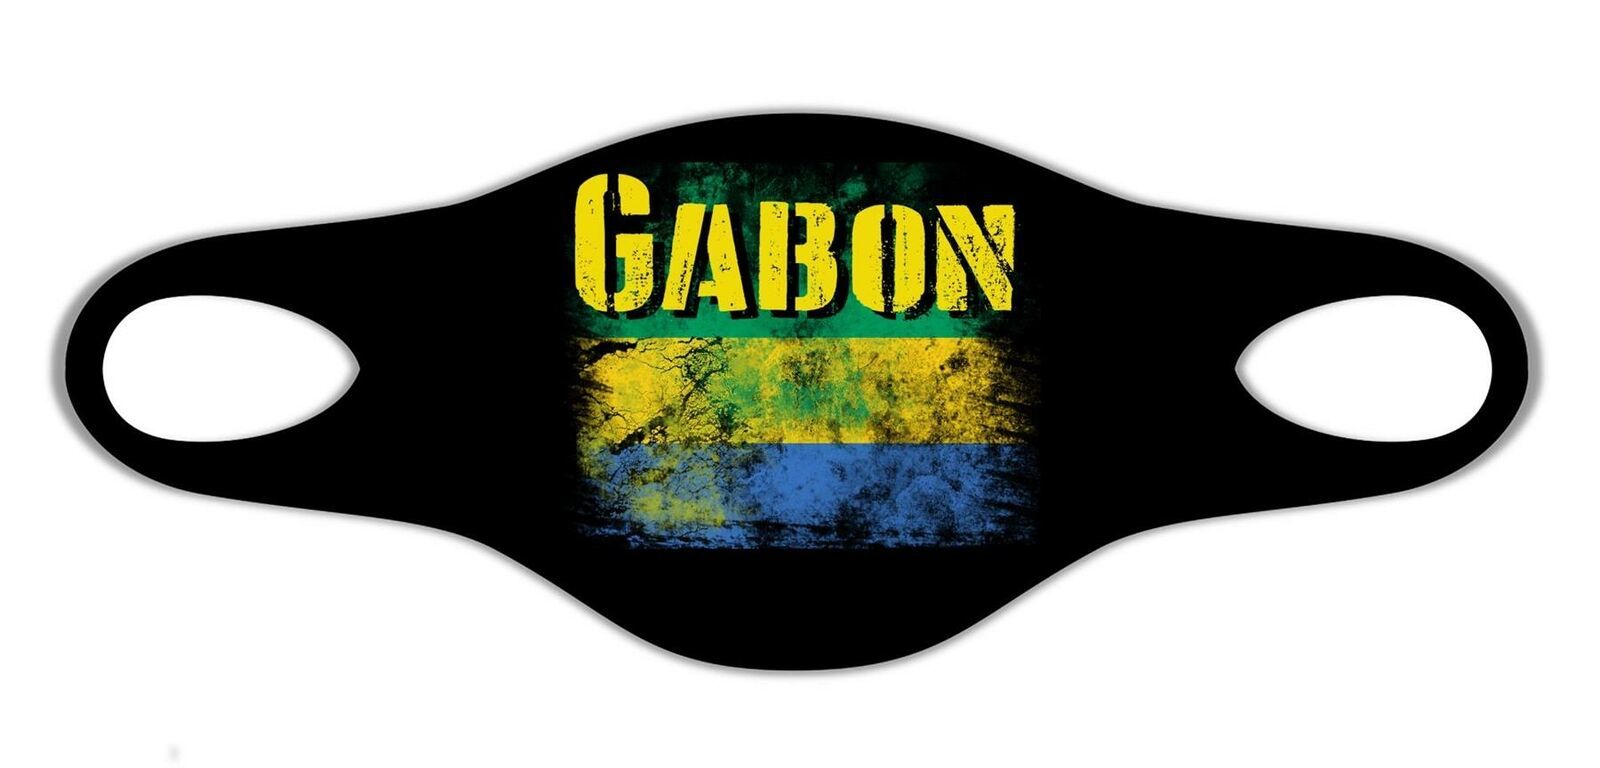 Gabon National Flag Soft Face Mask Protective Reusable washable Breathable